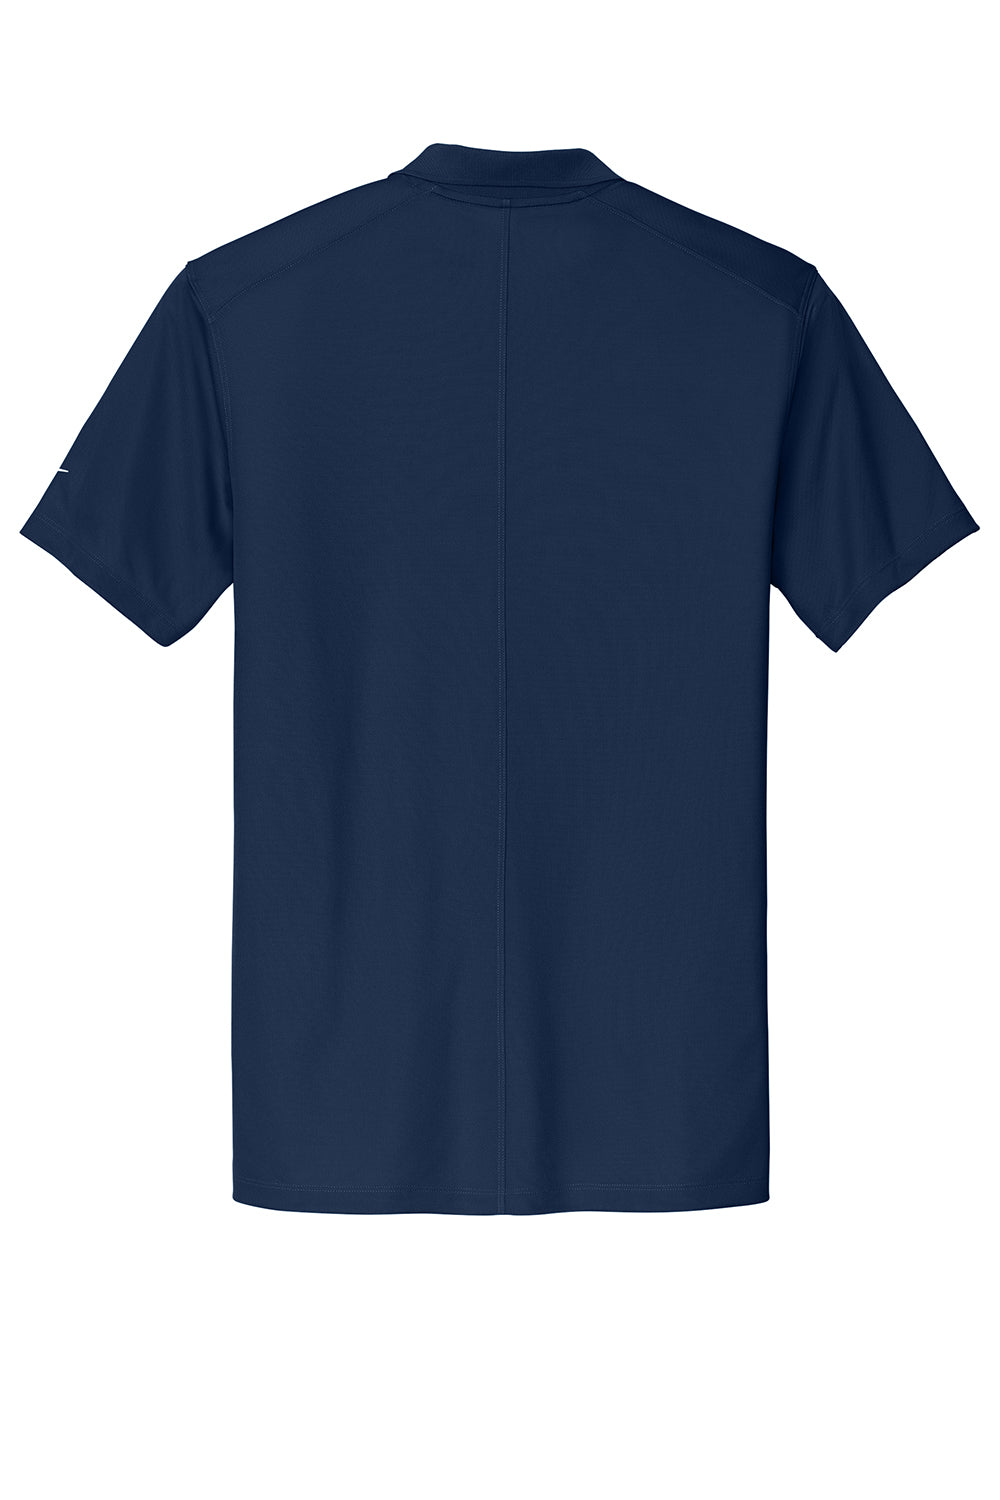 Nike NKDX6684 Mens Victory Dri-Fit Moisture Wicking Short Sleeve Polo Shirt College Navy Blue Flat Back